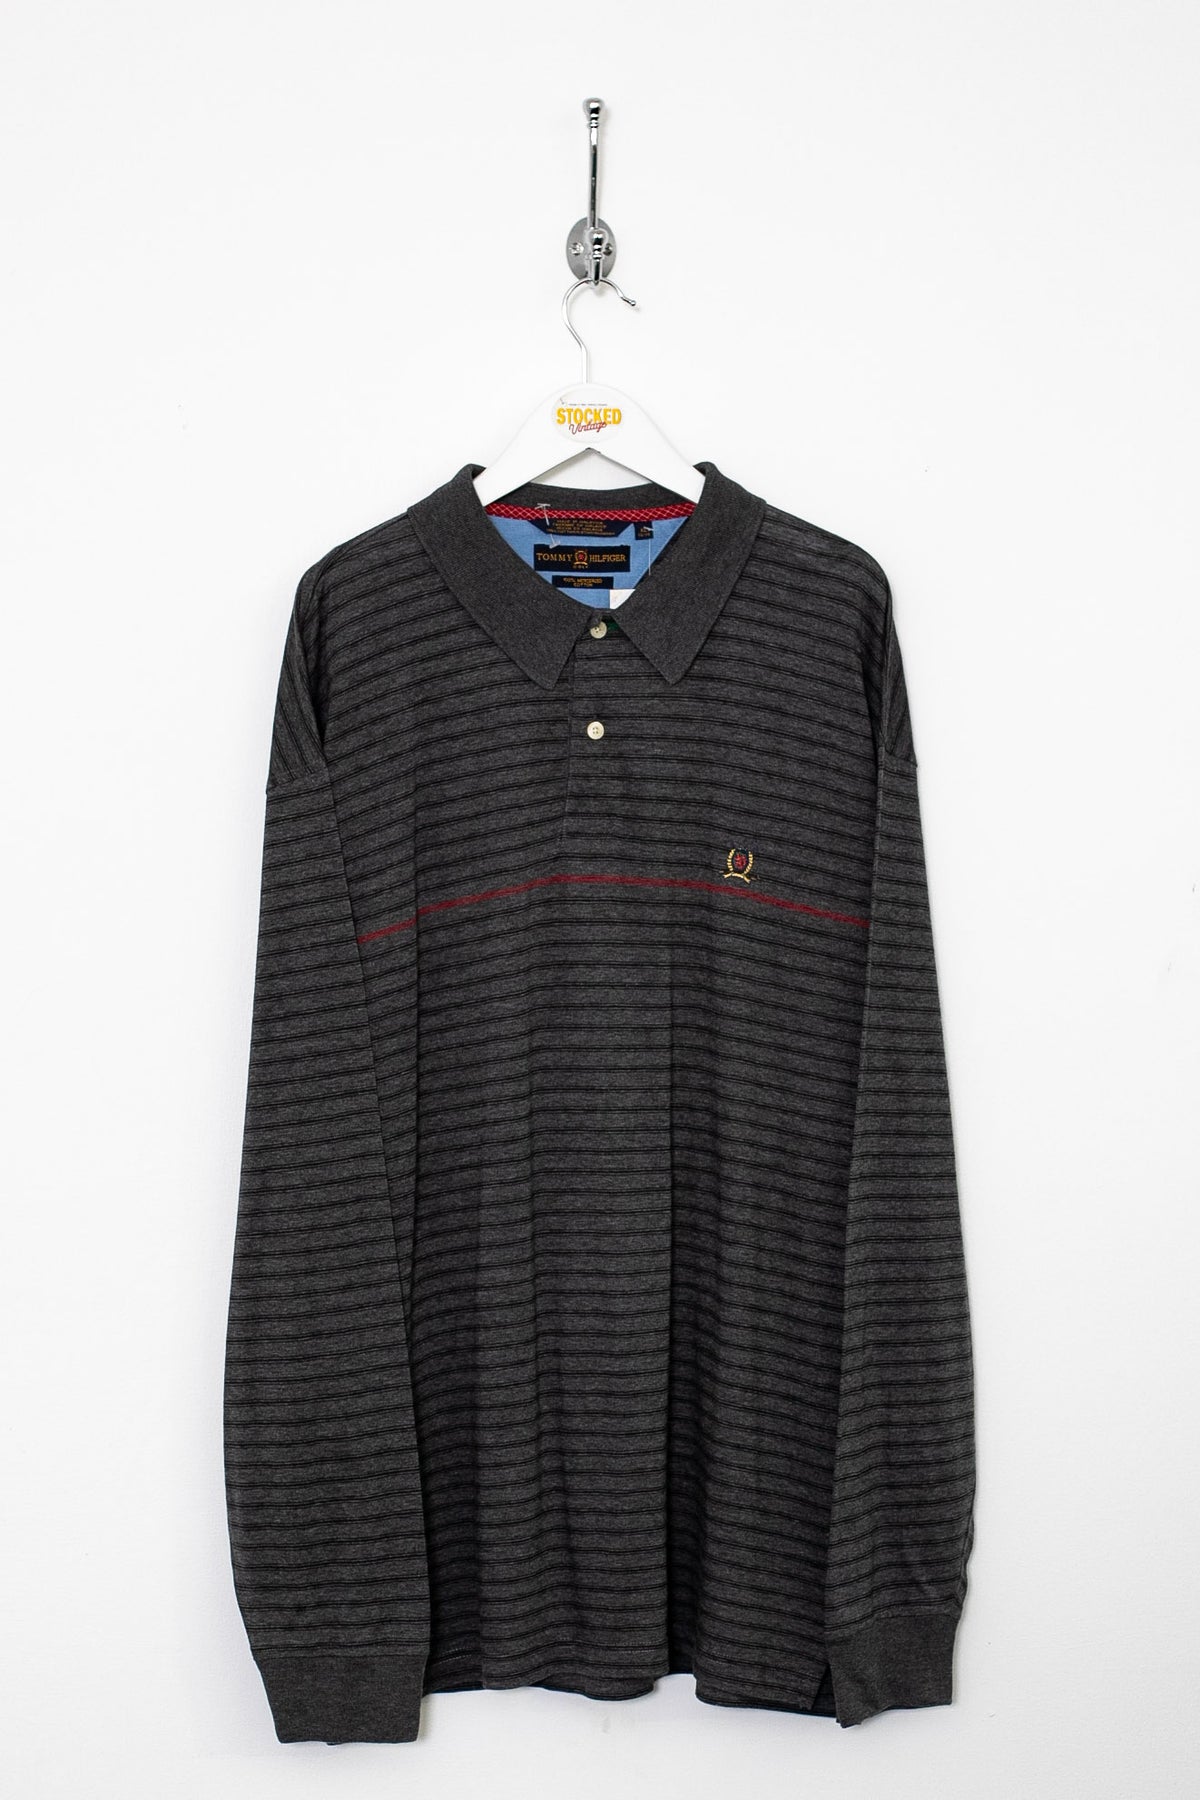 90s Tommy Hilfiger Long Sleeve Polo Shirt (XL)